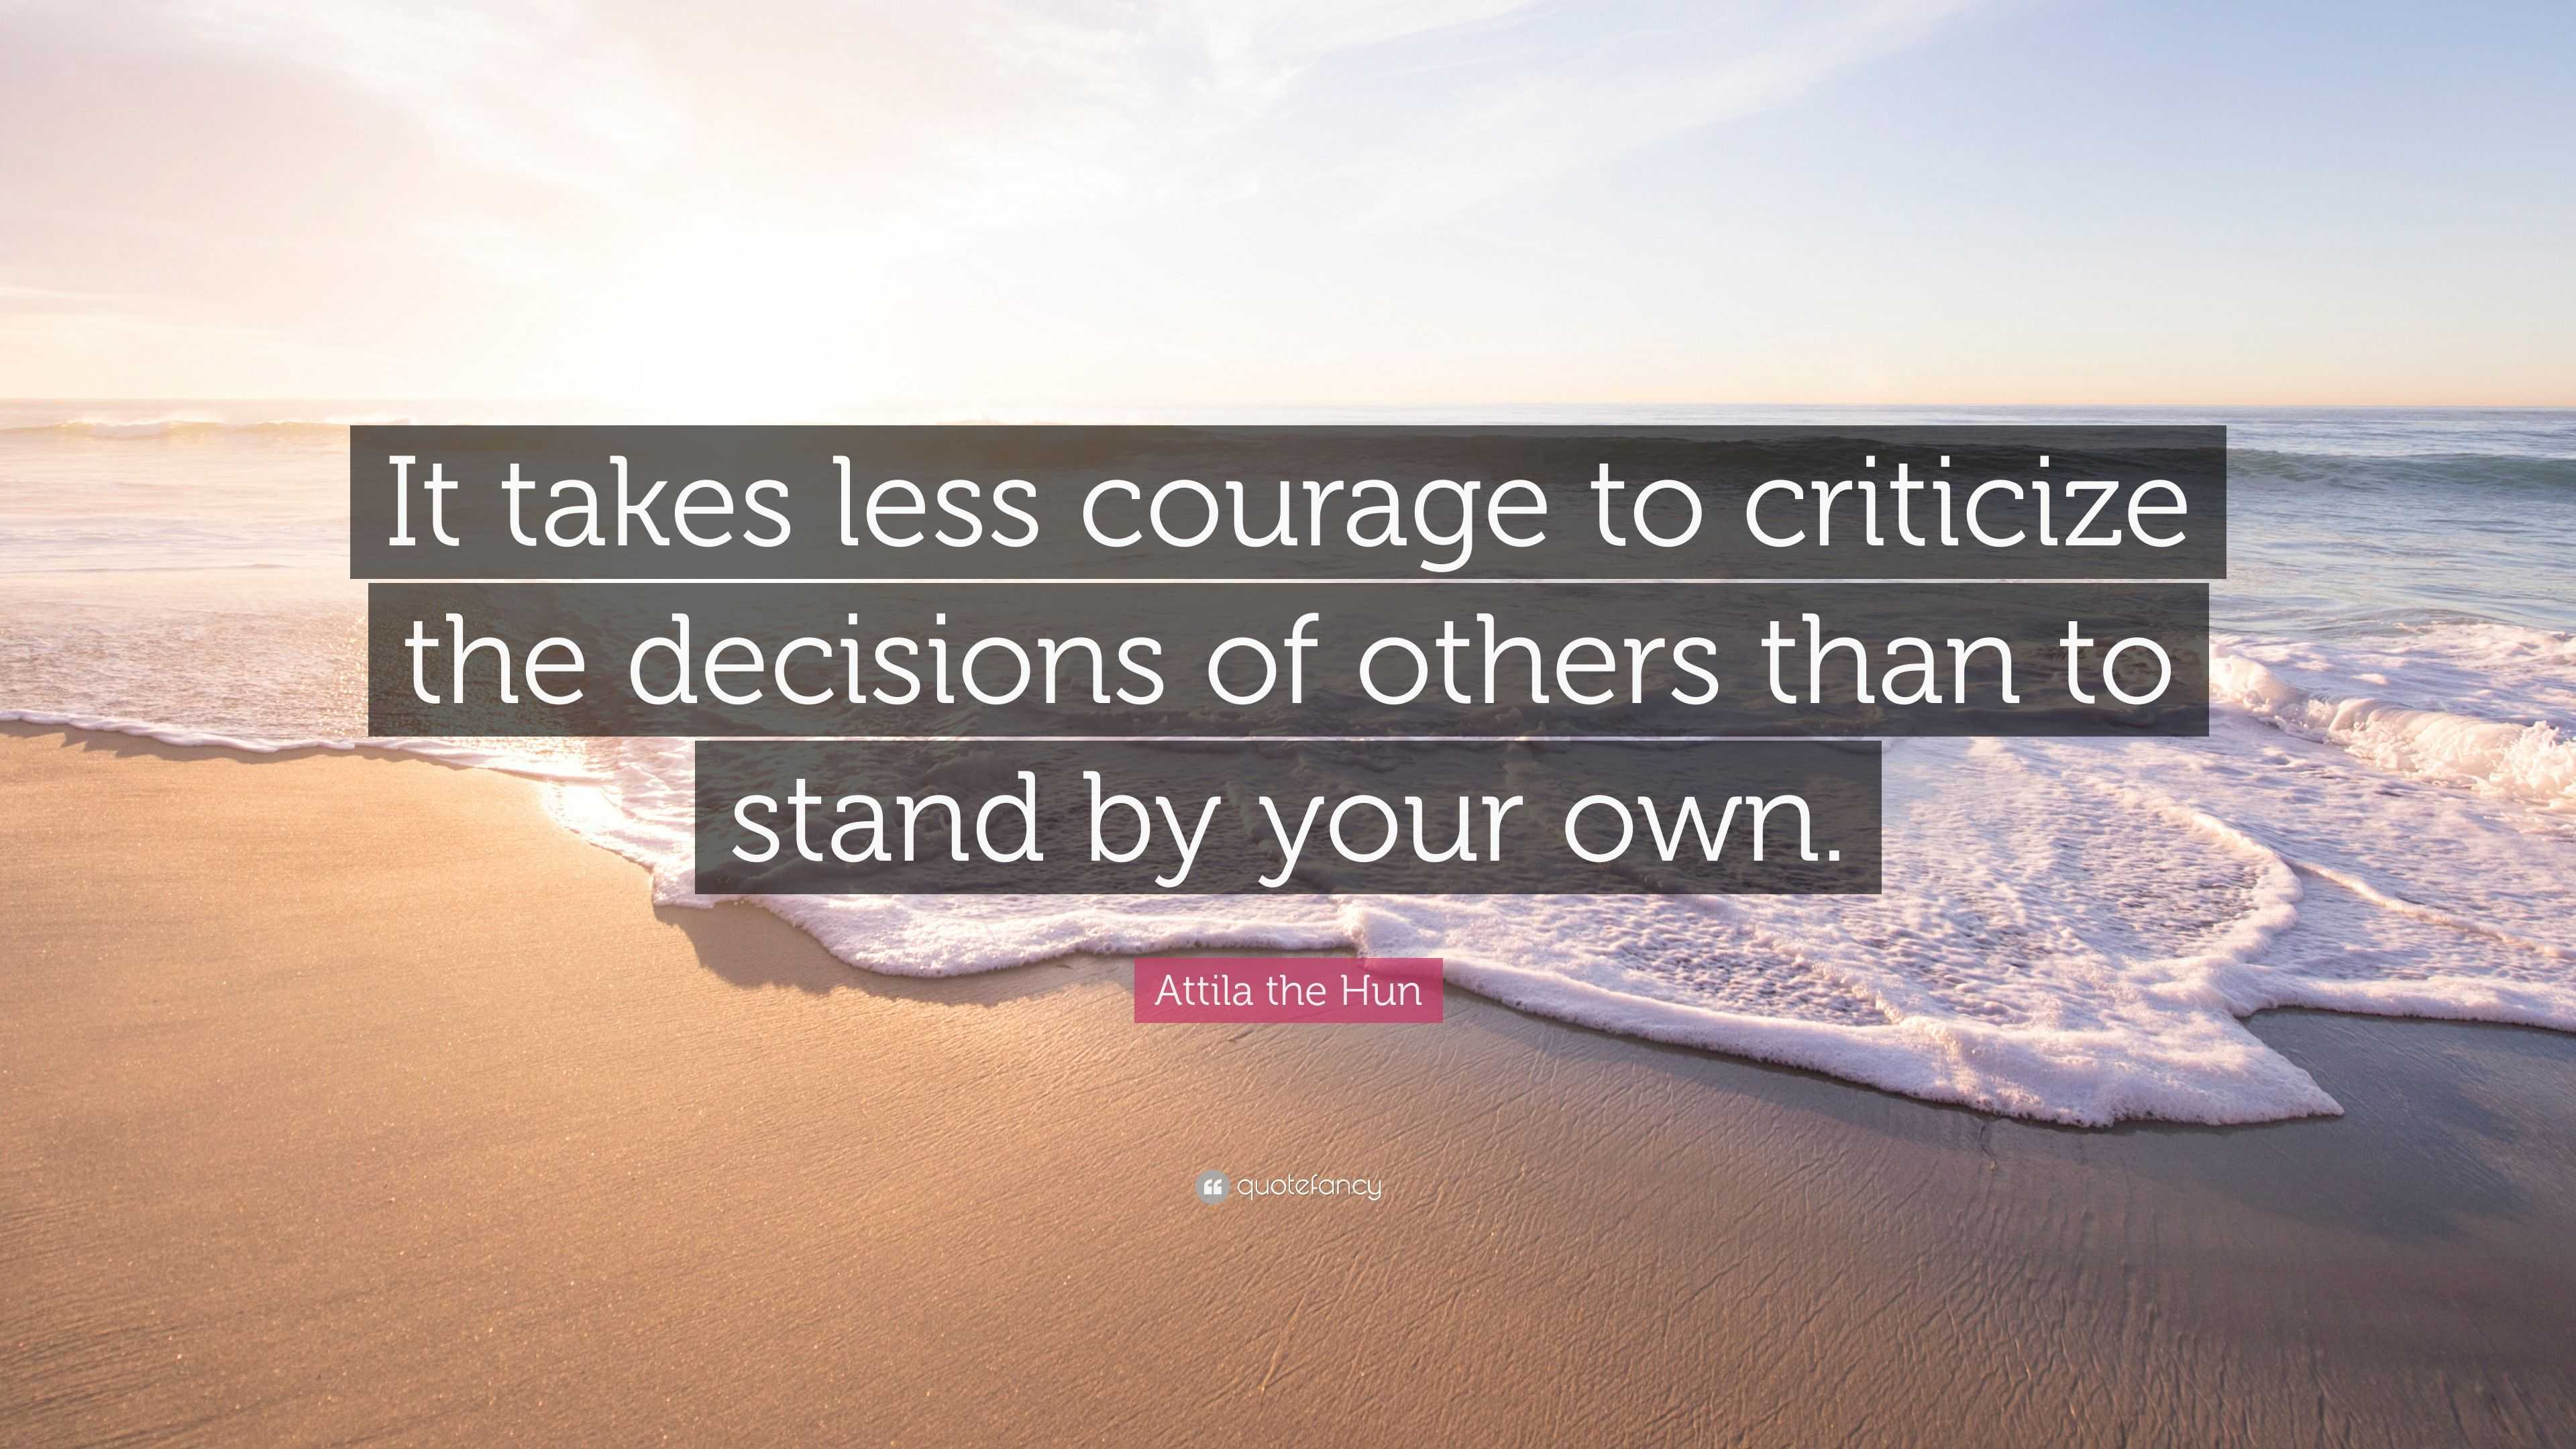 Attila the Hun Quote: “It takes less courage to criticize the decisions